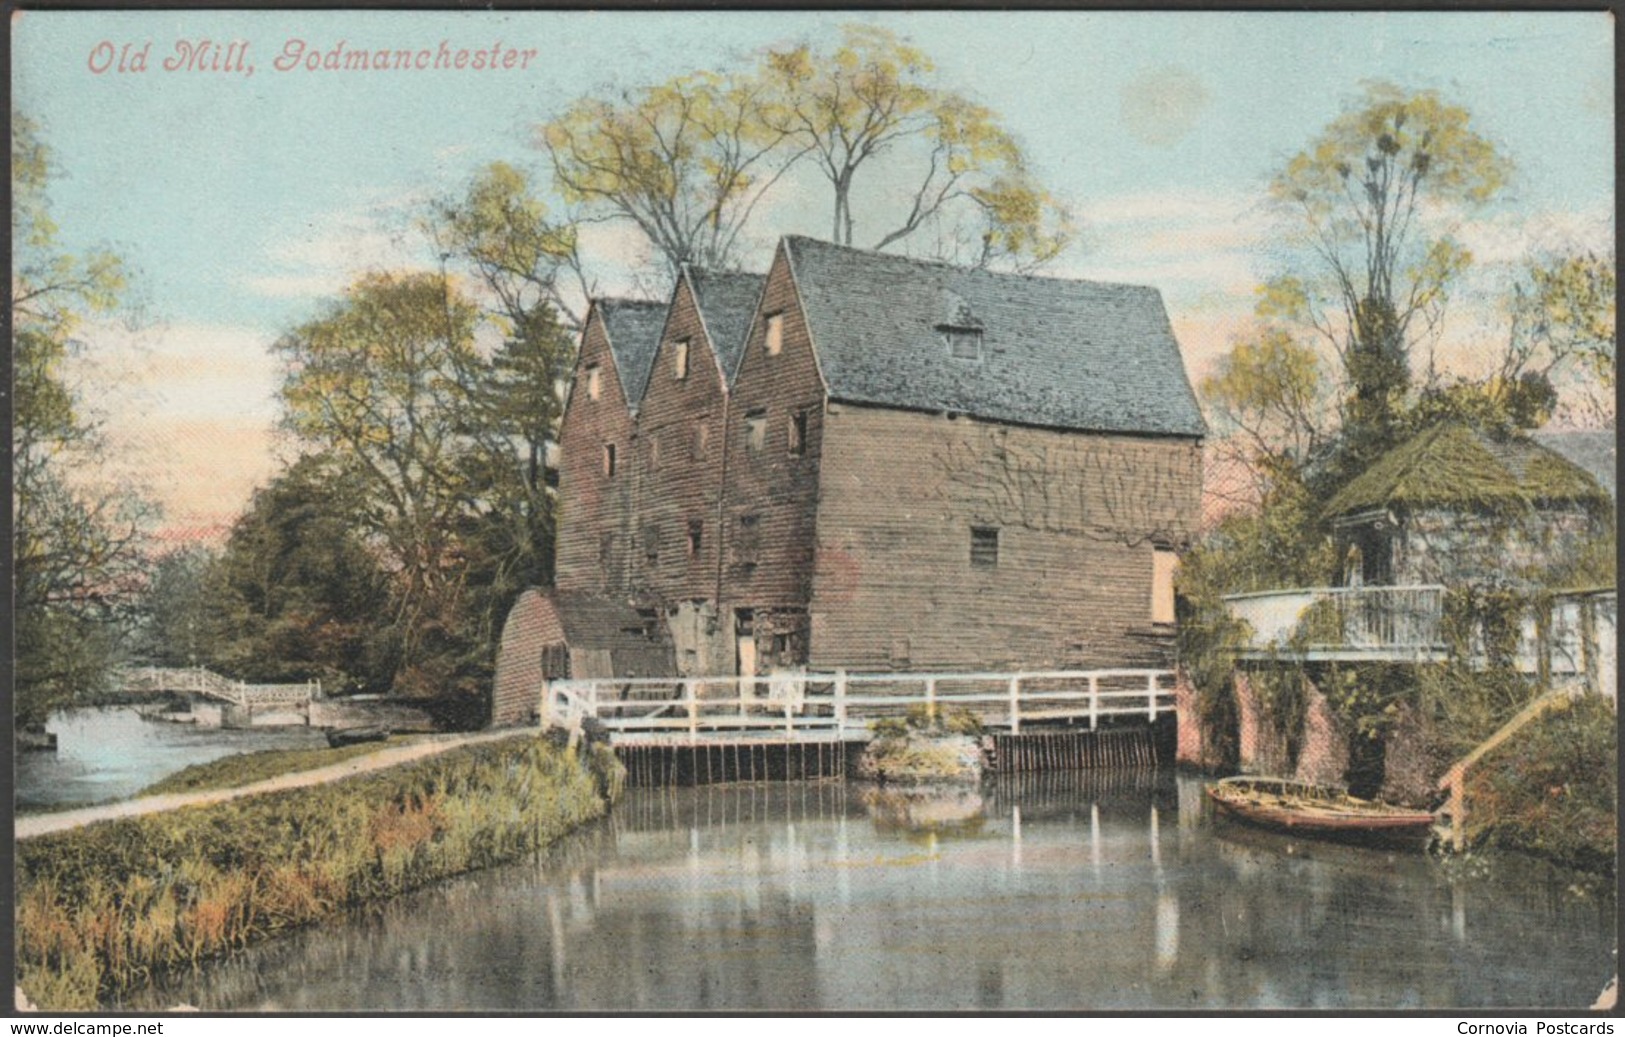 Old Mill, Godmanchester, Huntingdonshire, C.1905 - Valentine's Postcard - Huntingdonshire